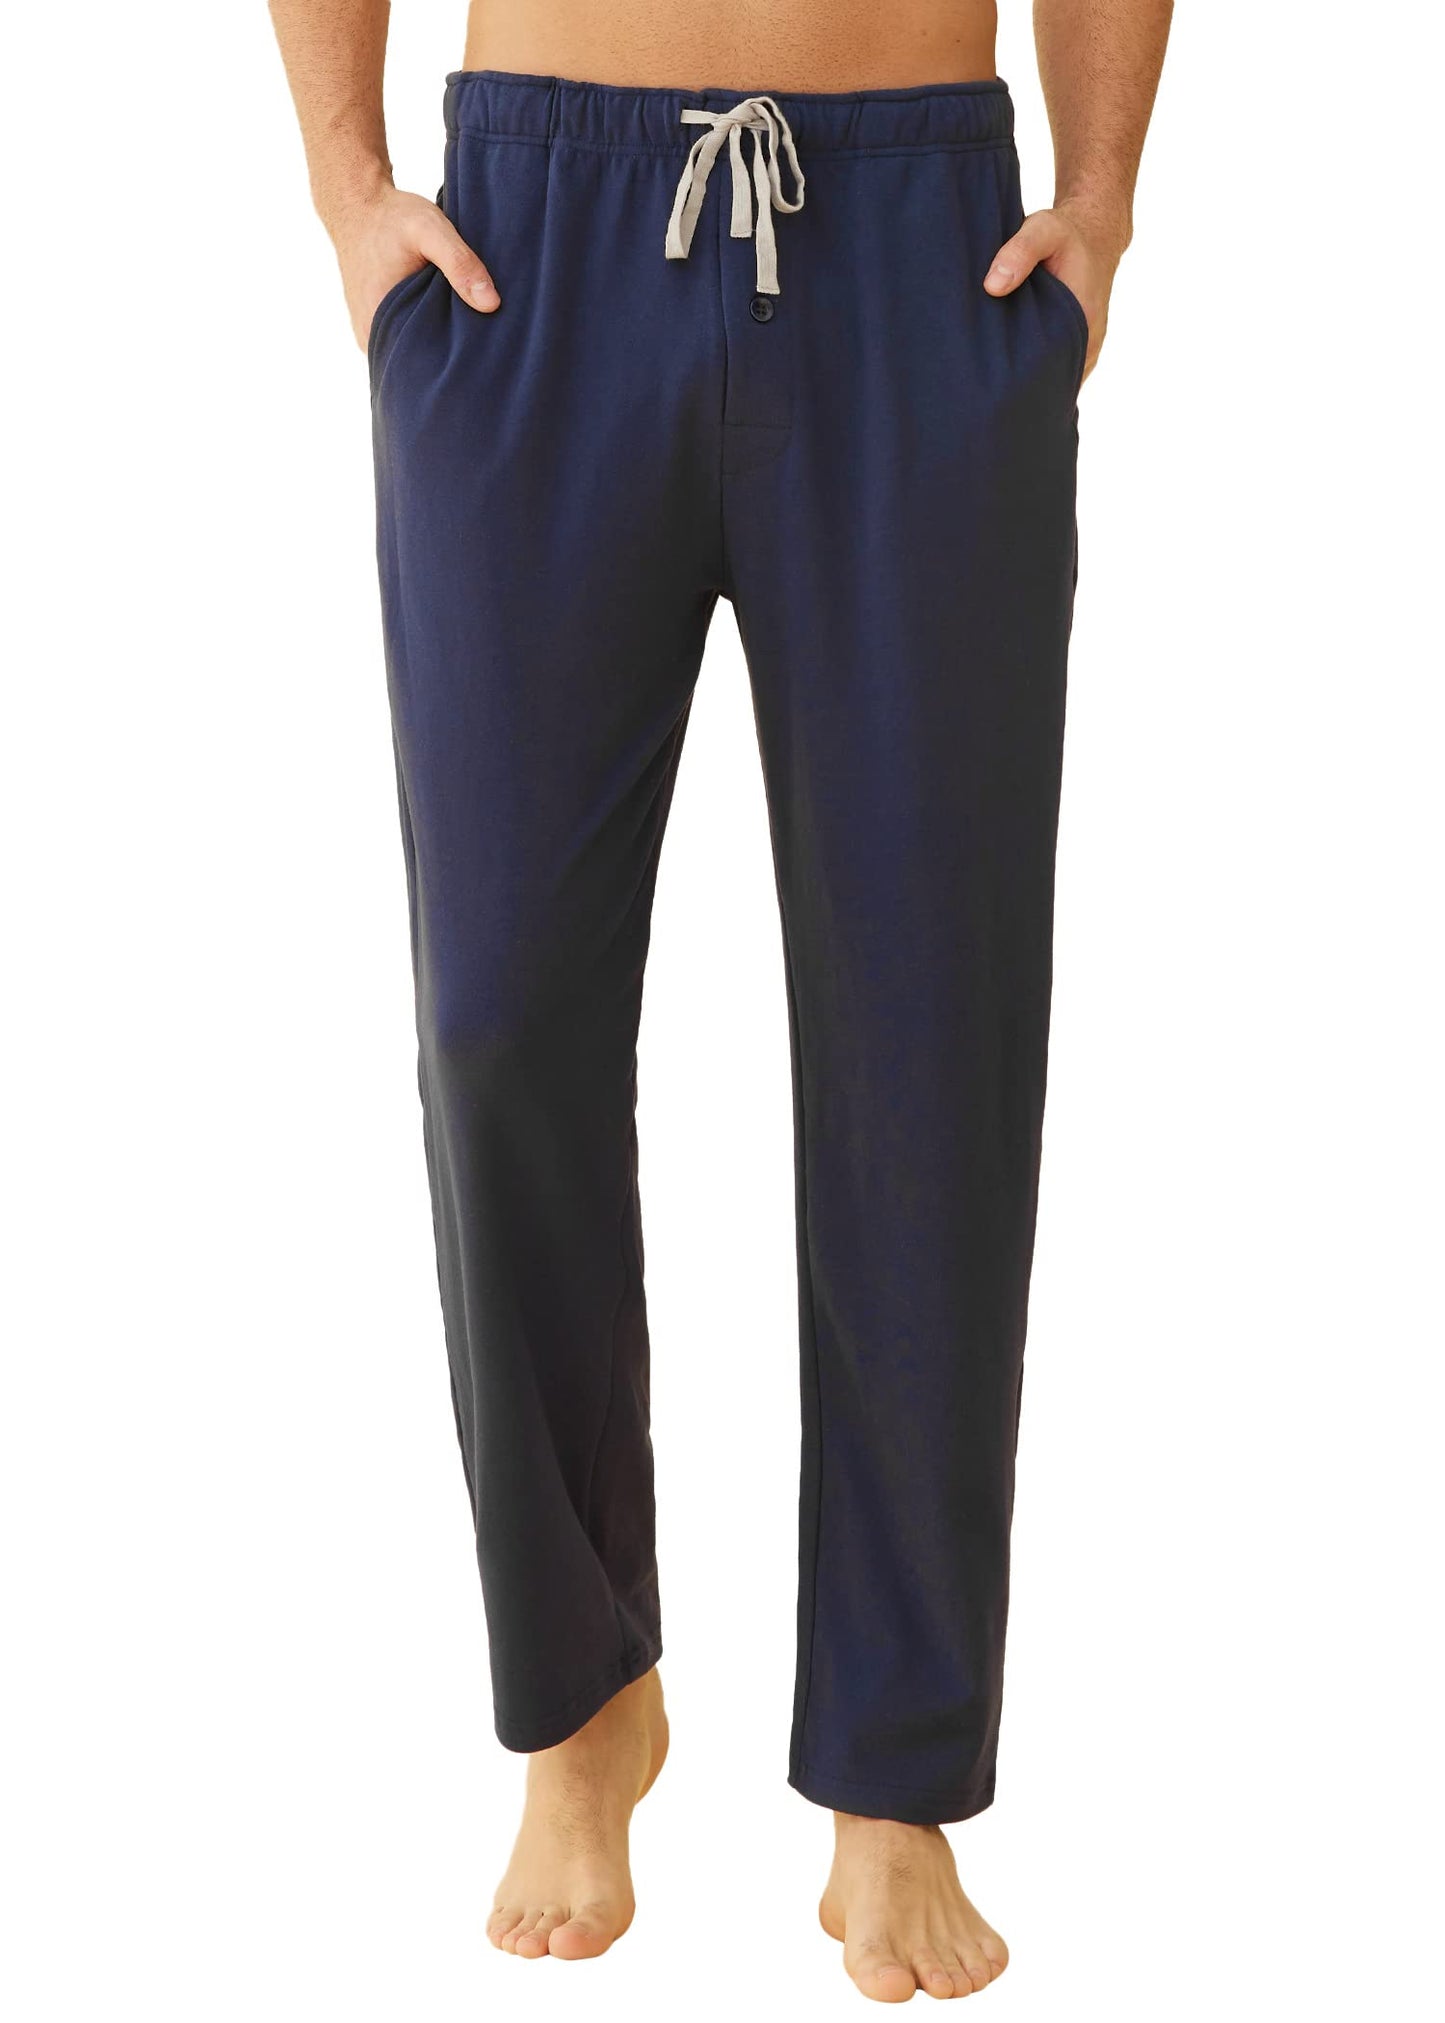 Men's Modal Pajama Pants Lounge Pants with Pockets Soft Sleep Pj Bottoms